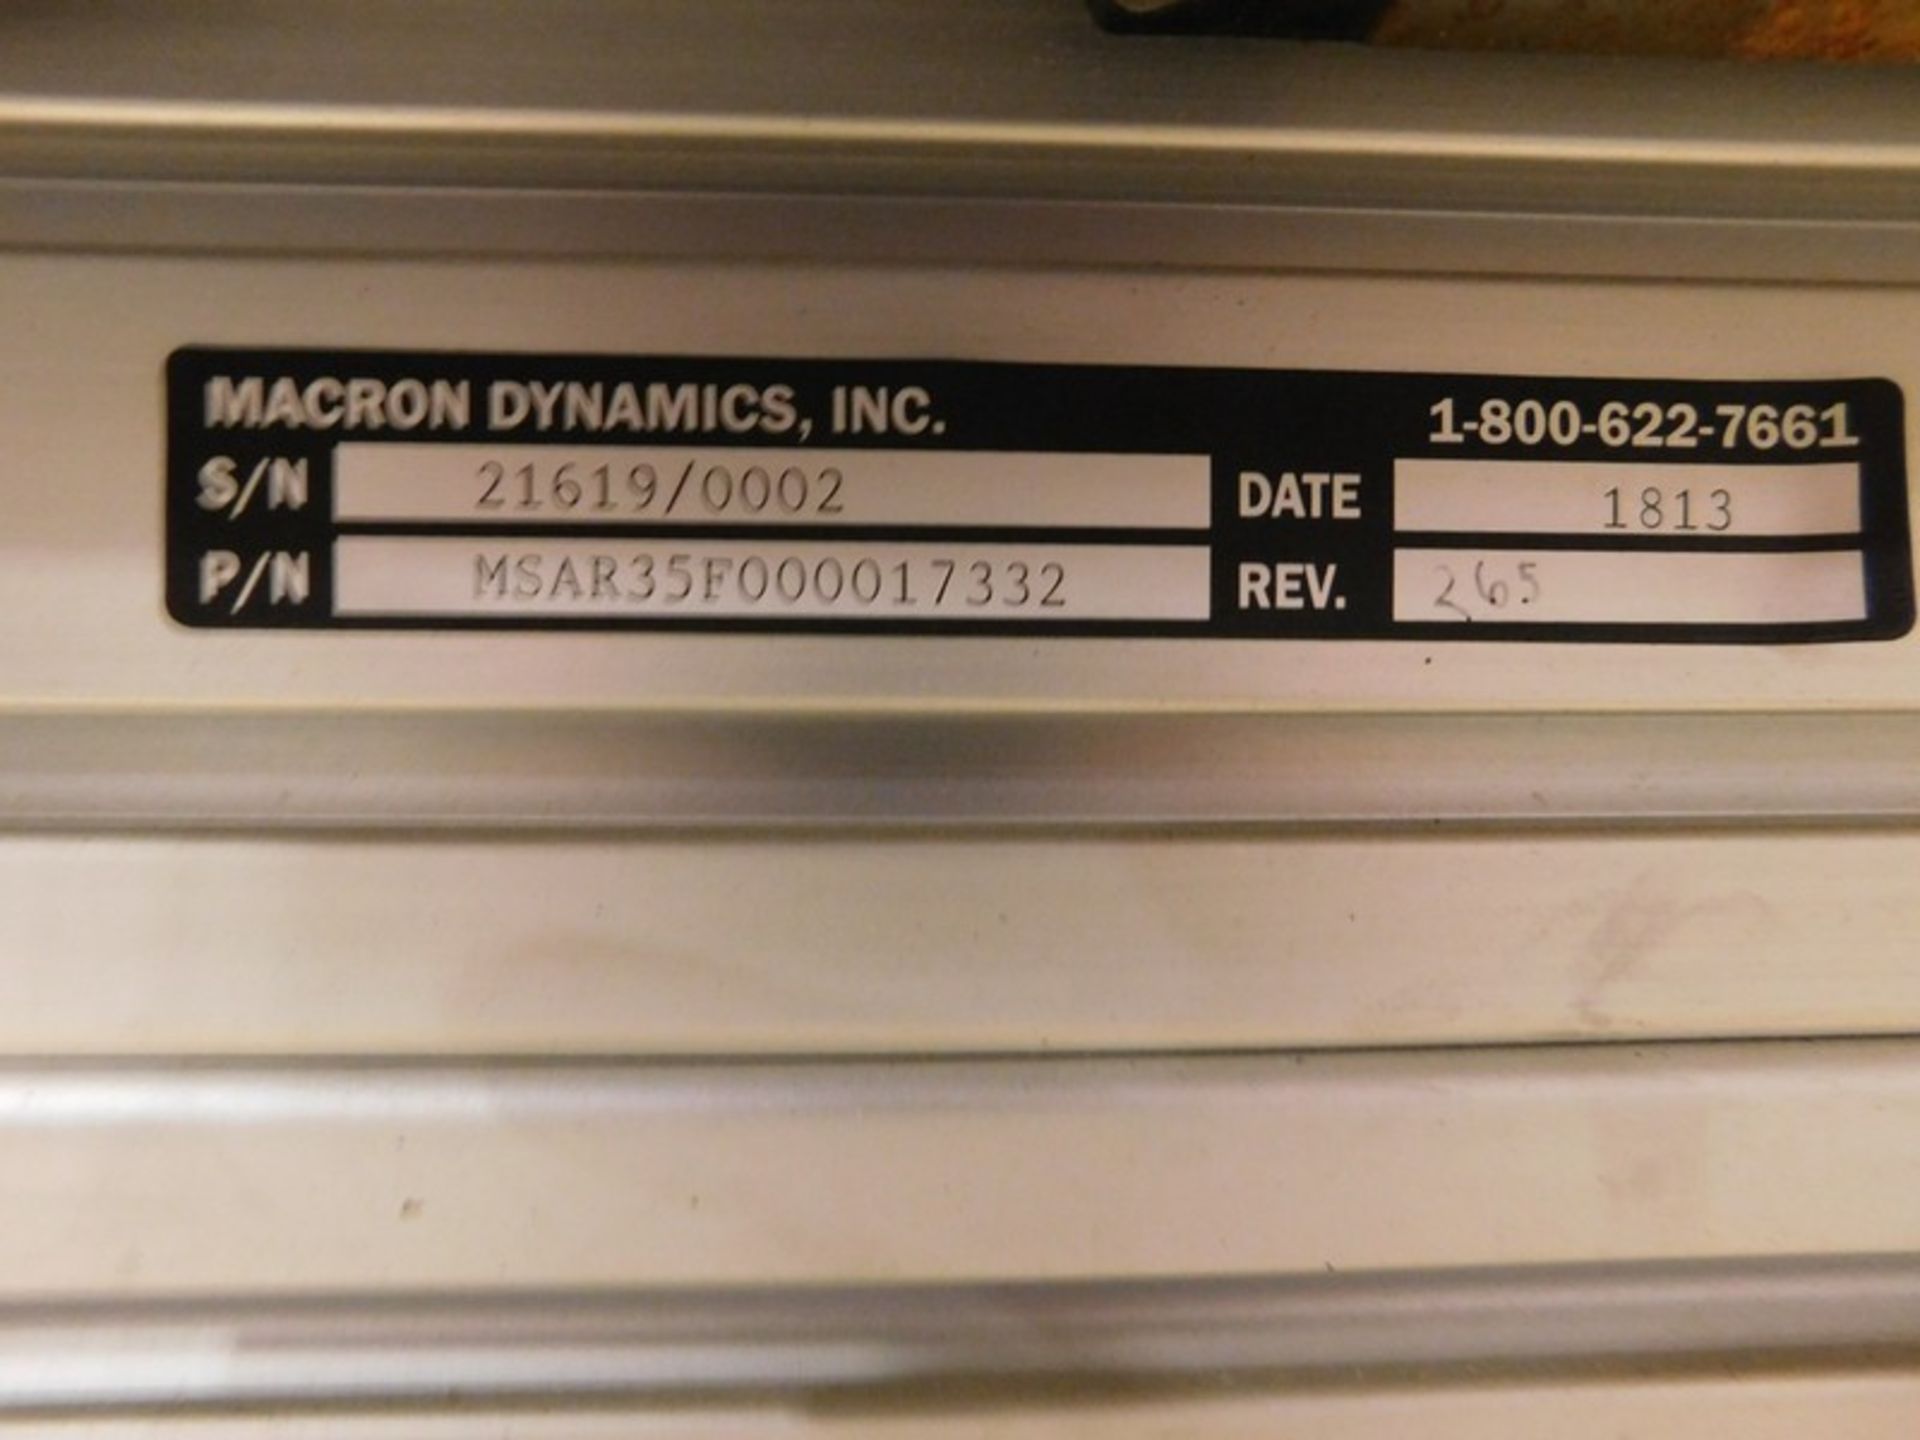 Macron Dynamics MSAR35F000017332 MacSTANDARD Single Axis System 21619/0002 (Loading Fee $25) - Image 3 of 4